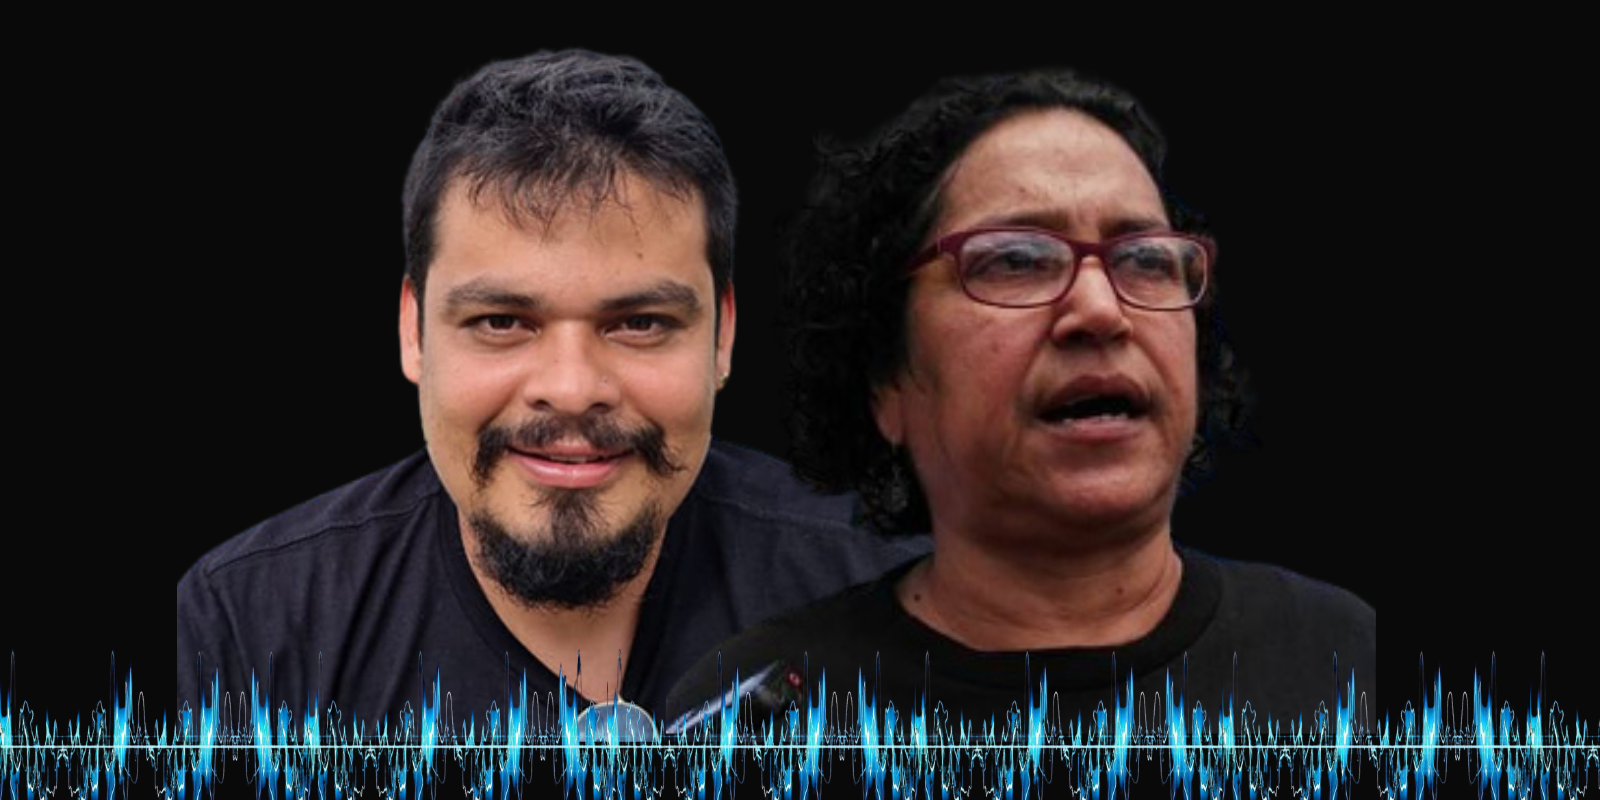 Quitar la nacionalidad, medida desesperada del régimen en Nicaragua